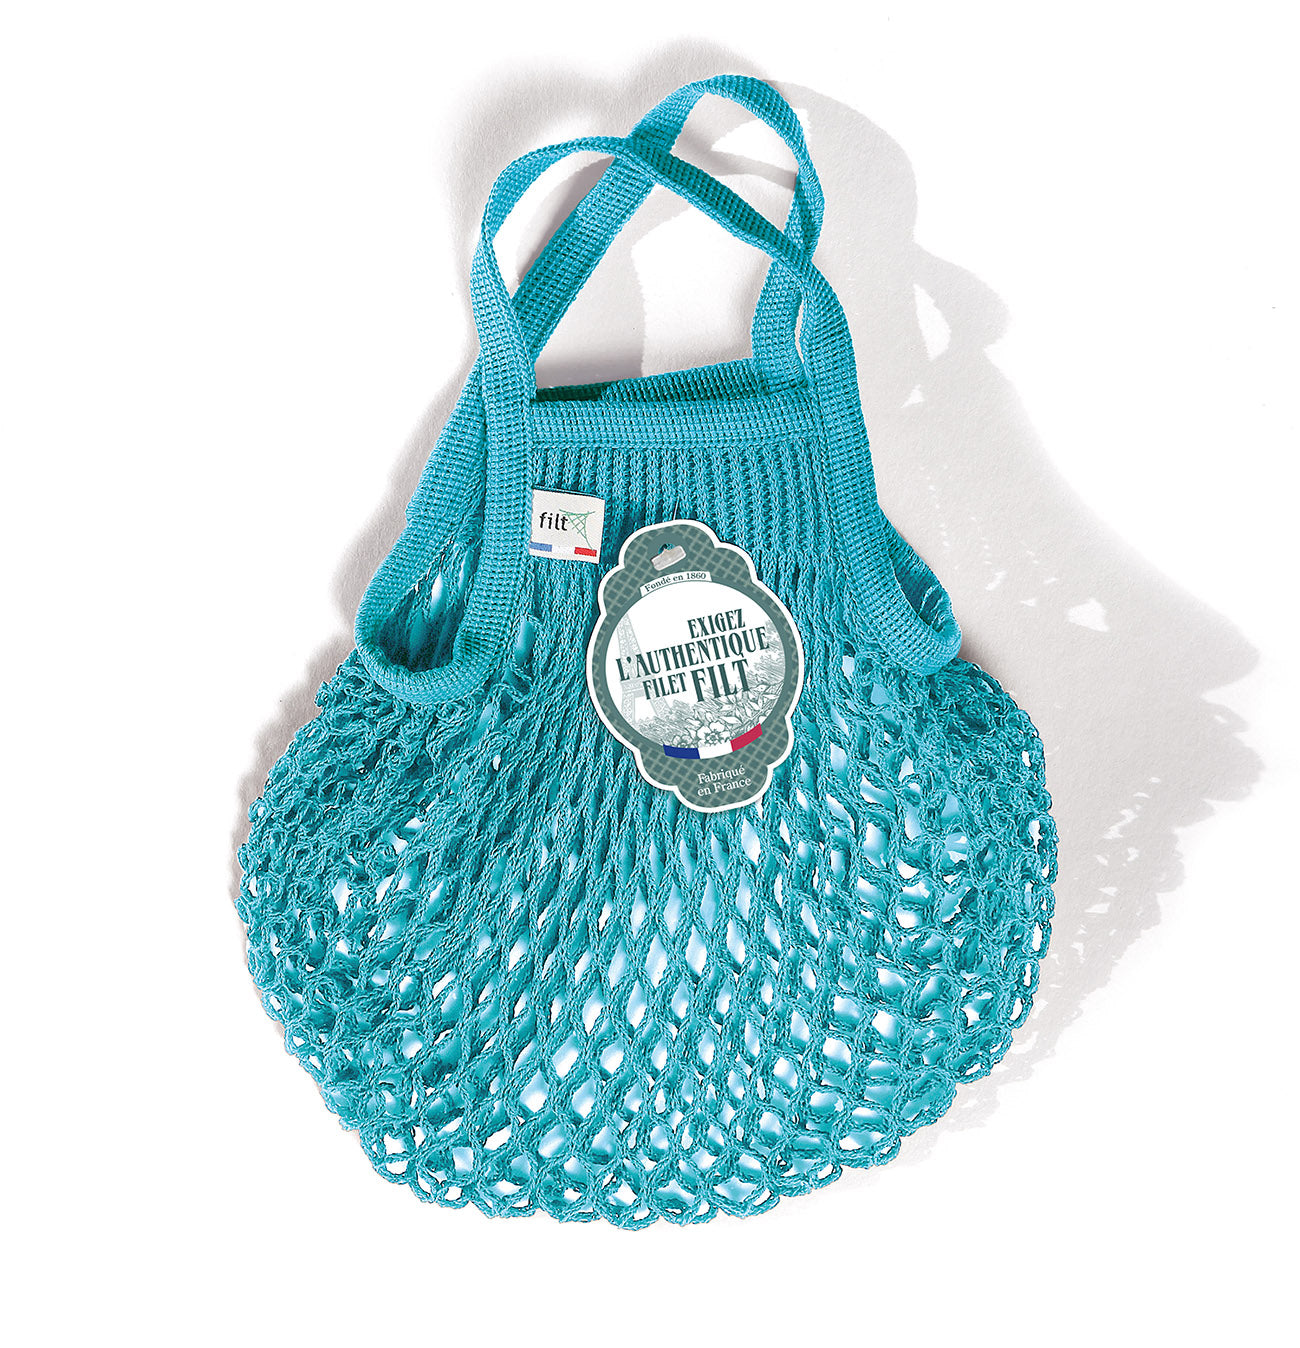 Filt Mini Bag in Turquoise Bag Filt Bags Brand_Filt Textiles_Shoppers 301_BleuJoyau